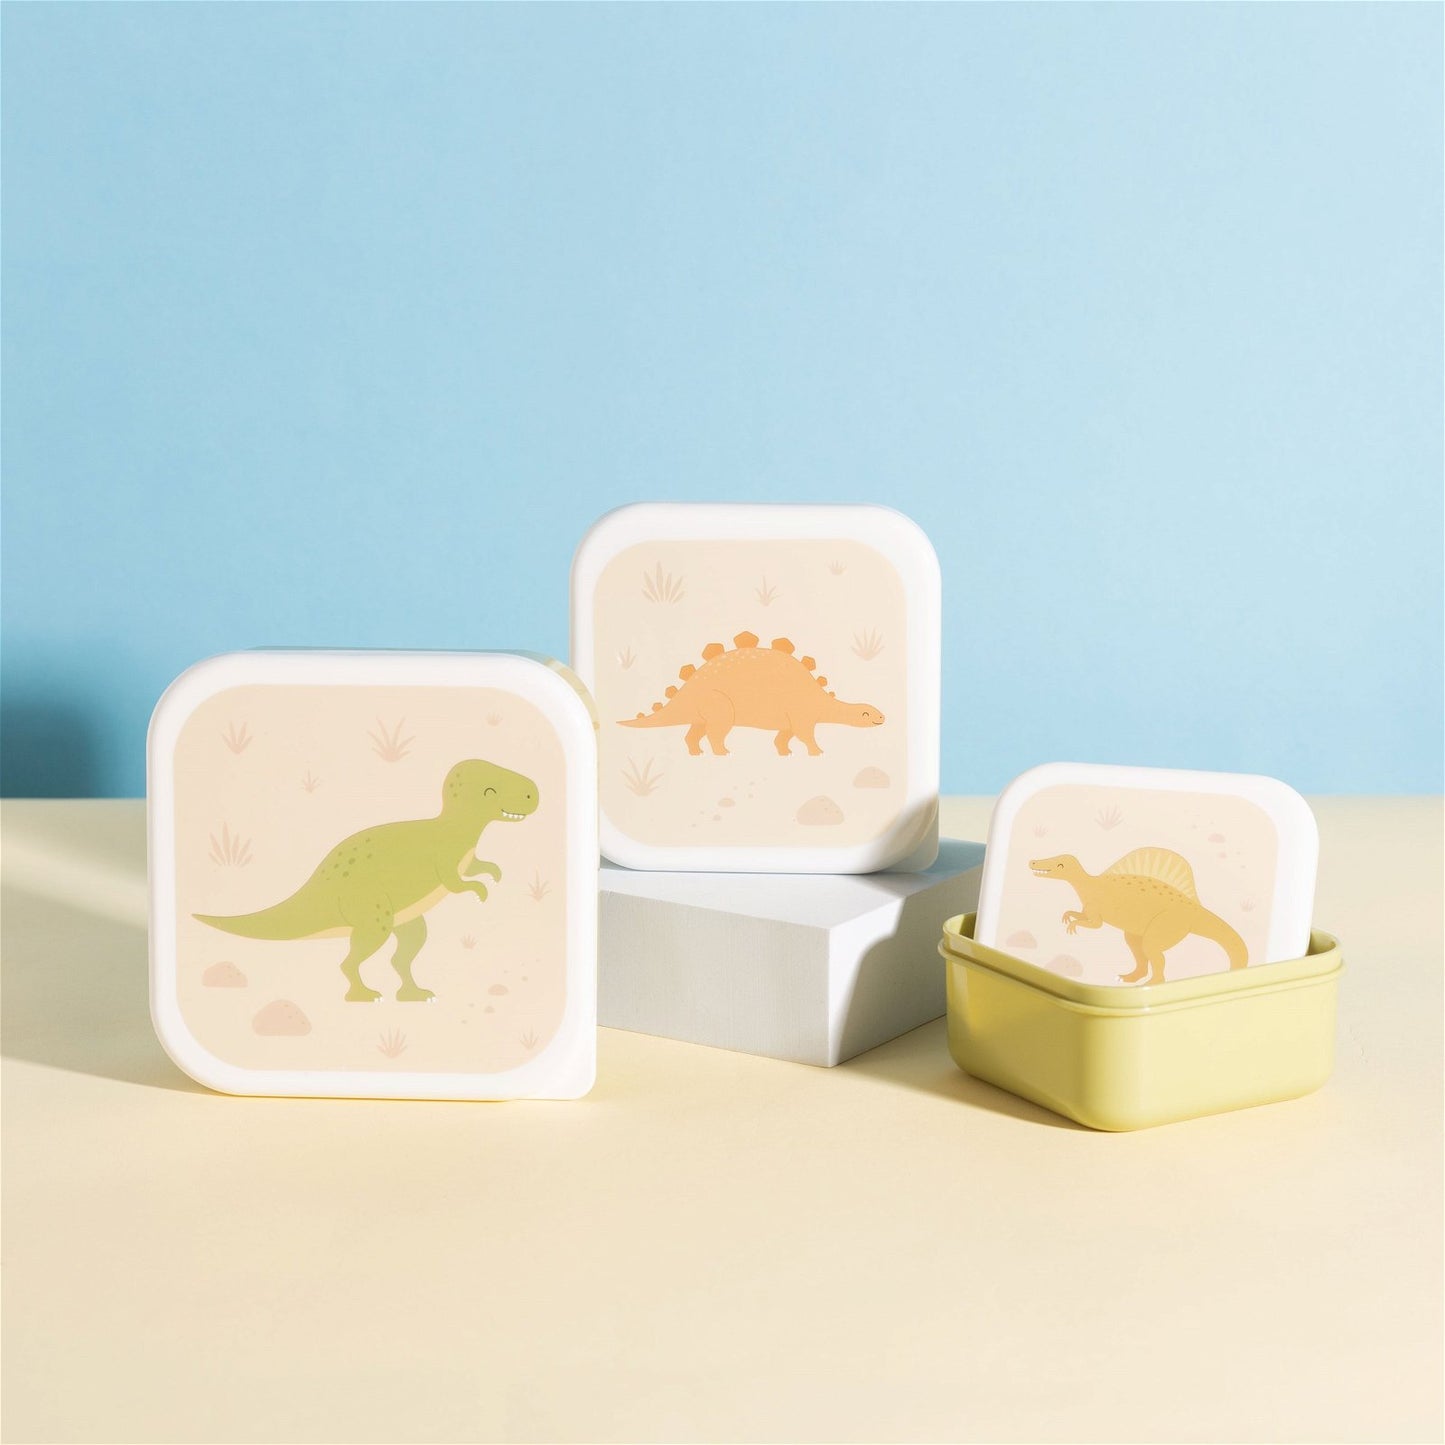 Desert Dino Lunch Boxes - Set of 3